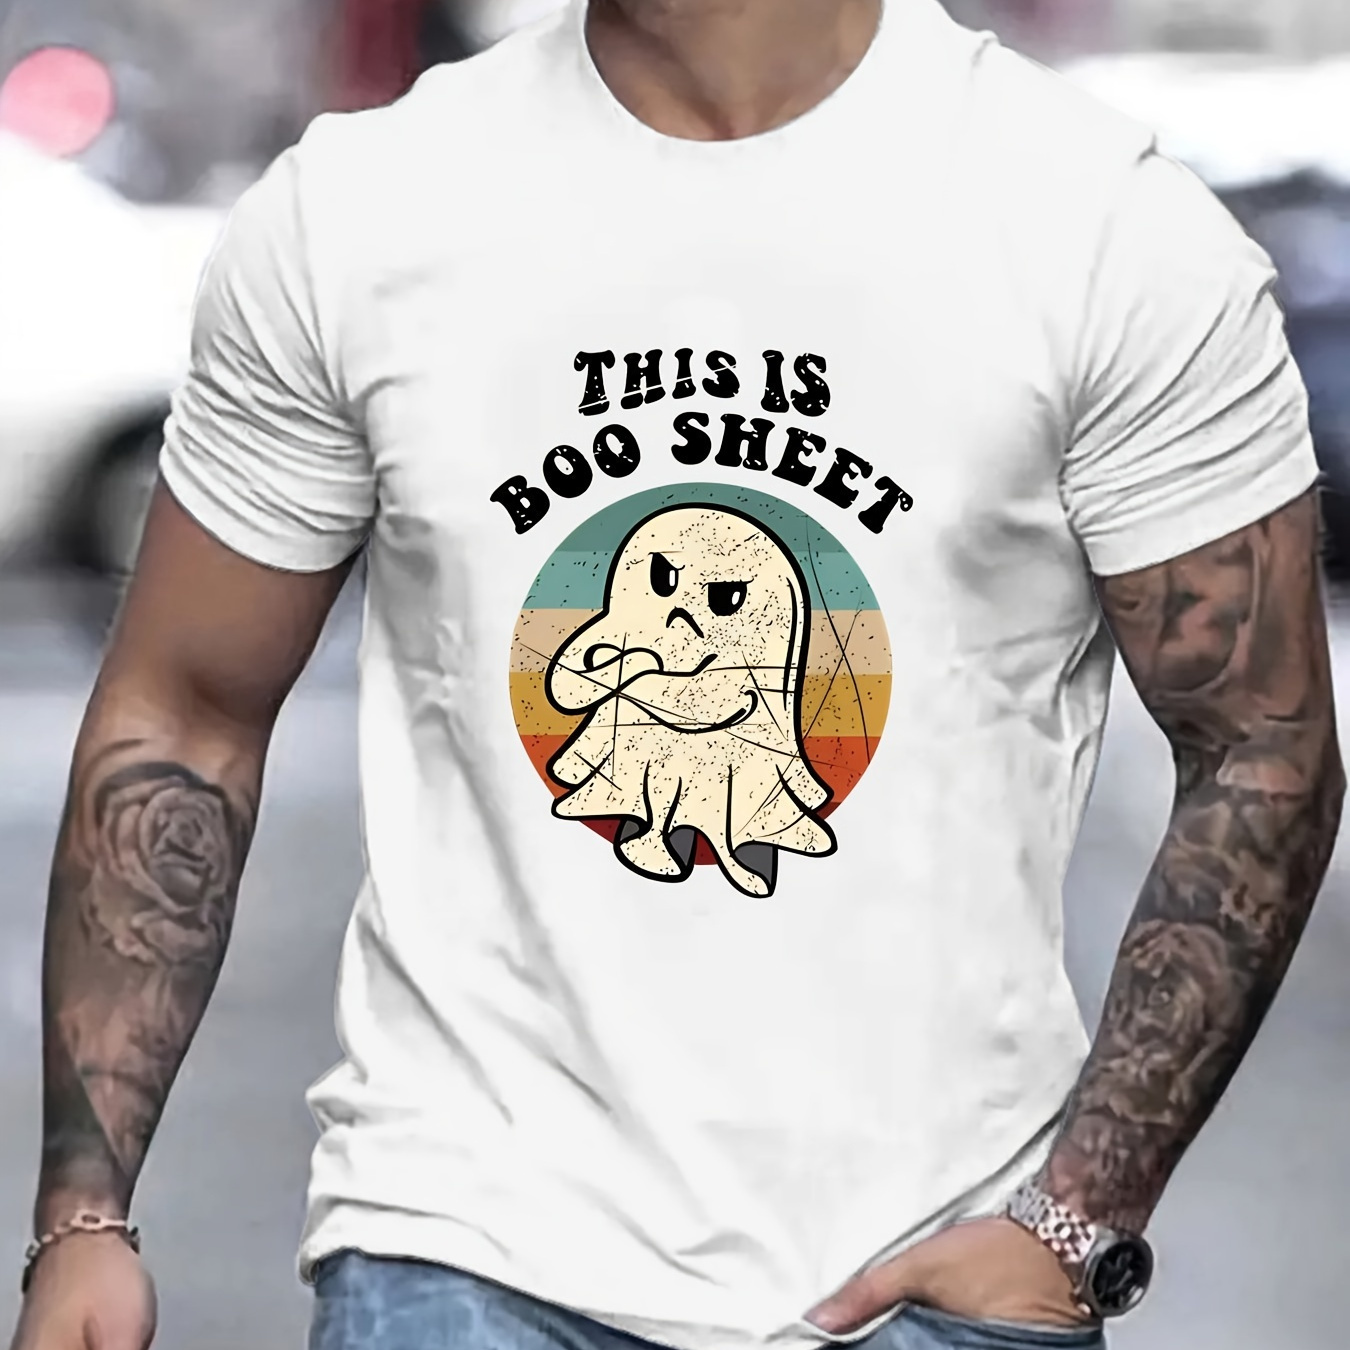 

Boo Sheet Print T Shirt, Tees For Men, Casual Short Sleeve T-shirt For Summer